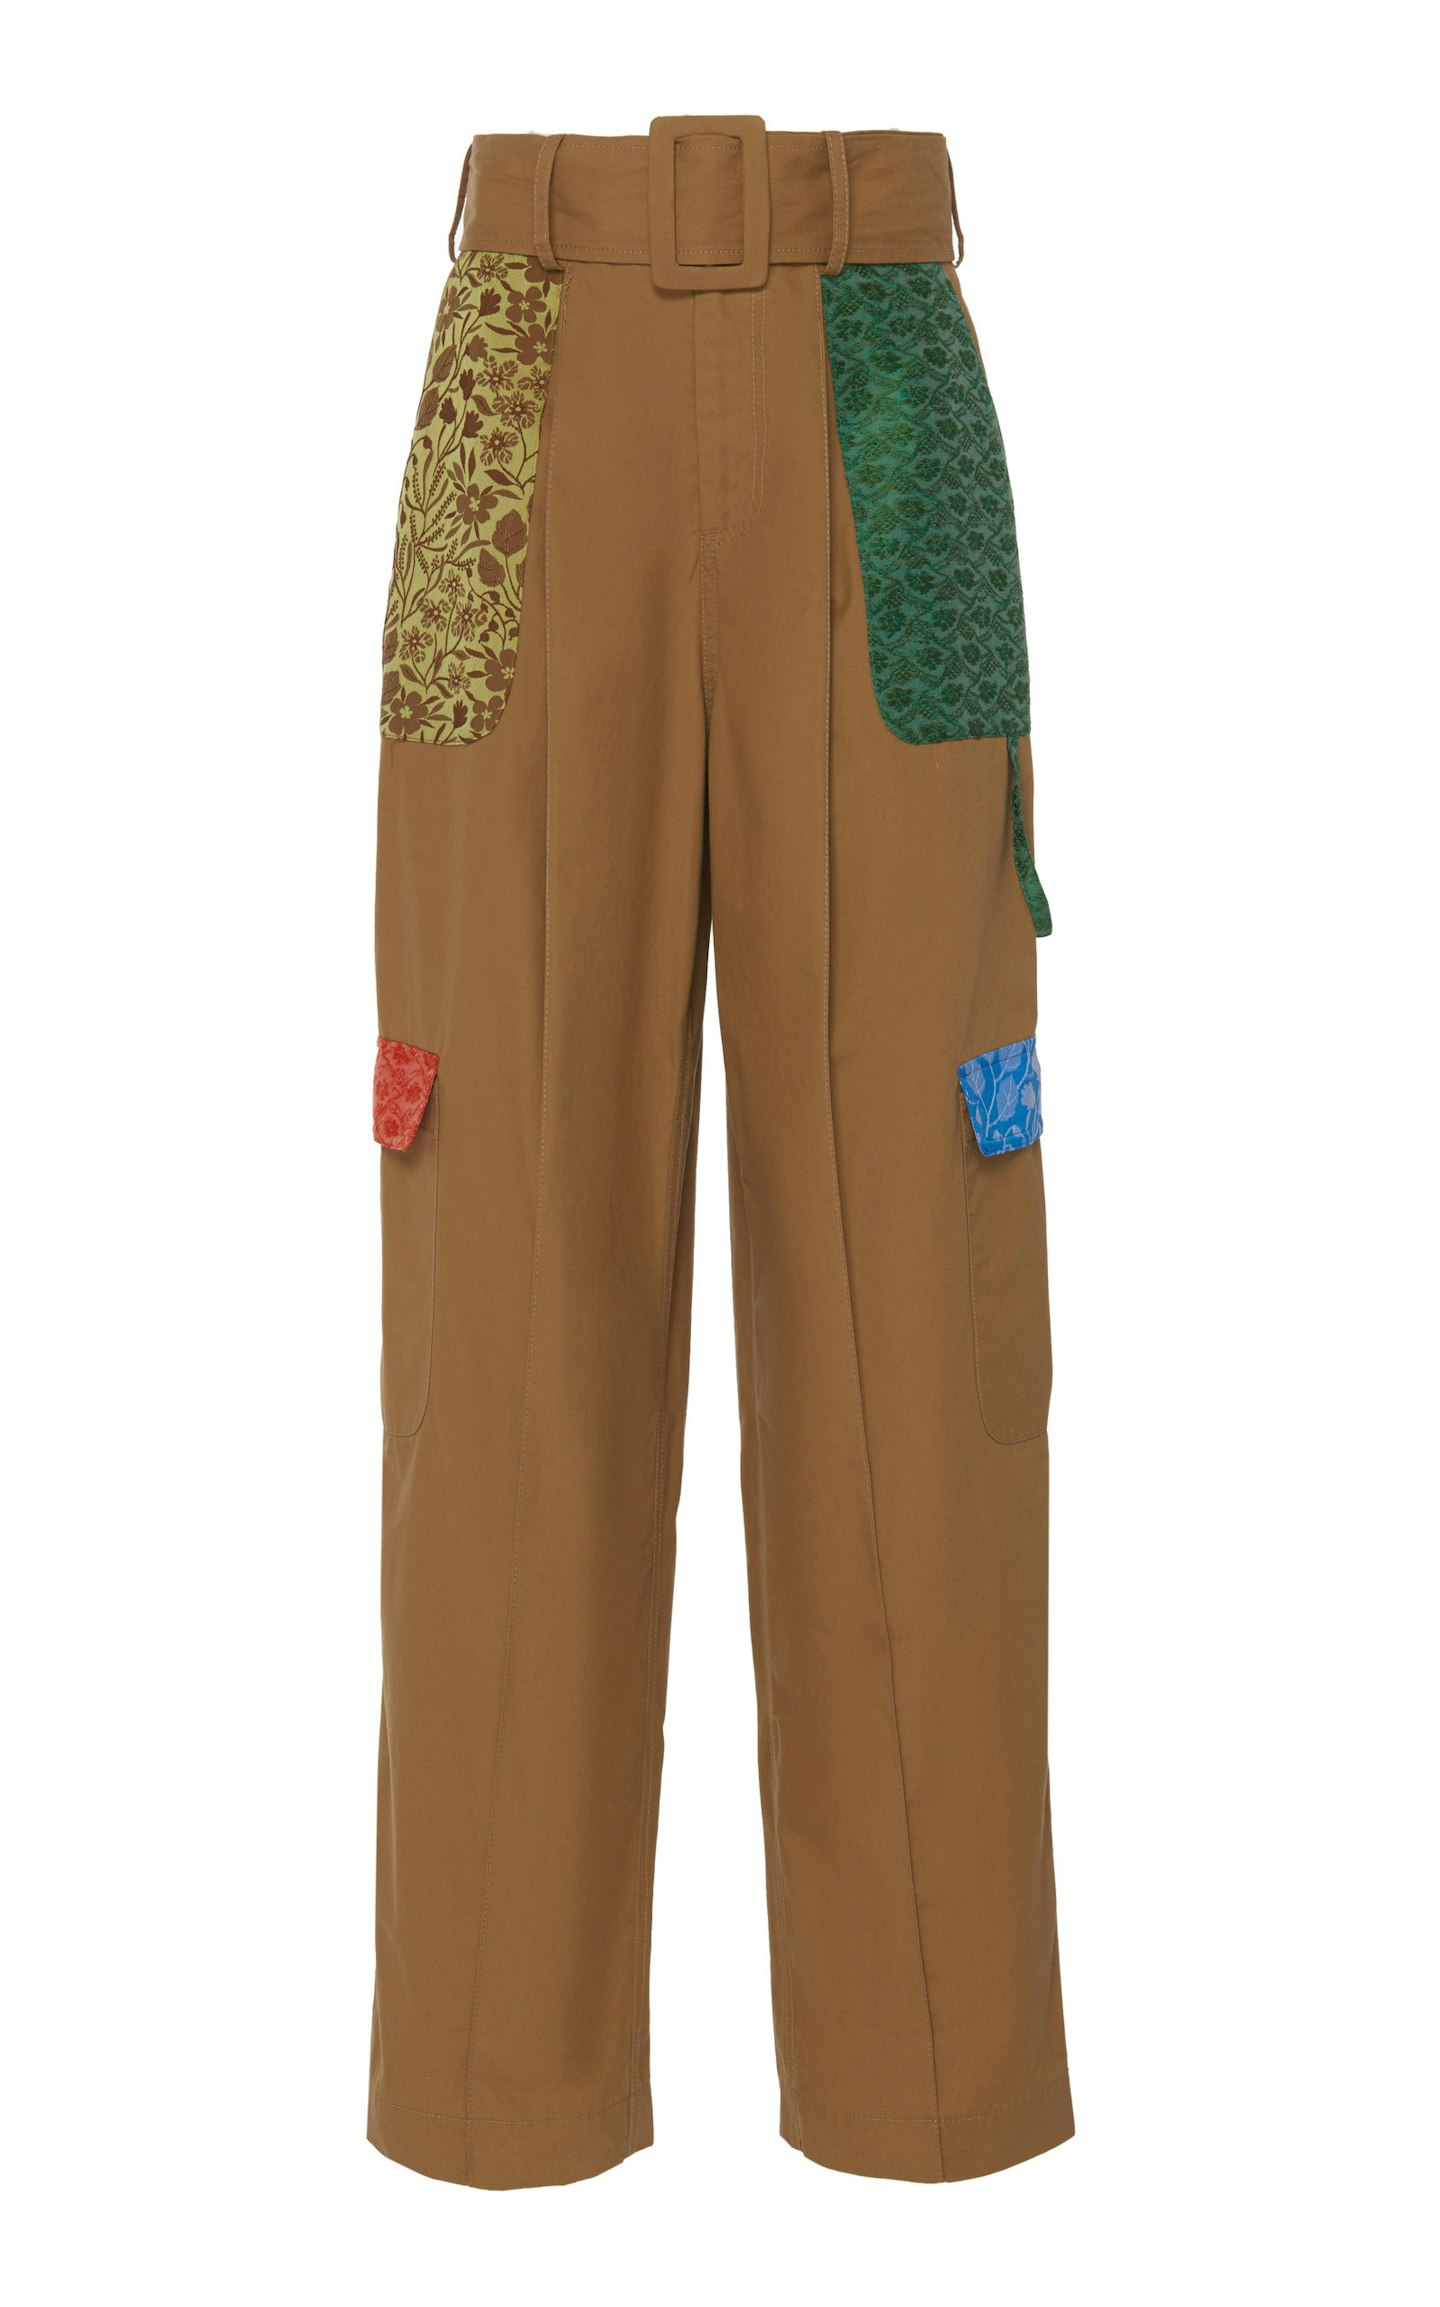 Rosie Assoulin, Patchwork Twill Cargo Pants, £1,134